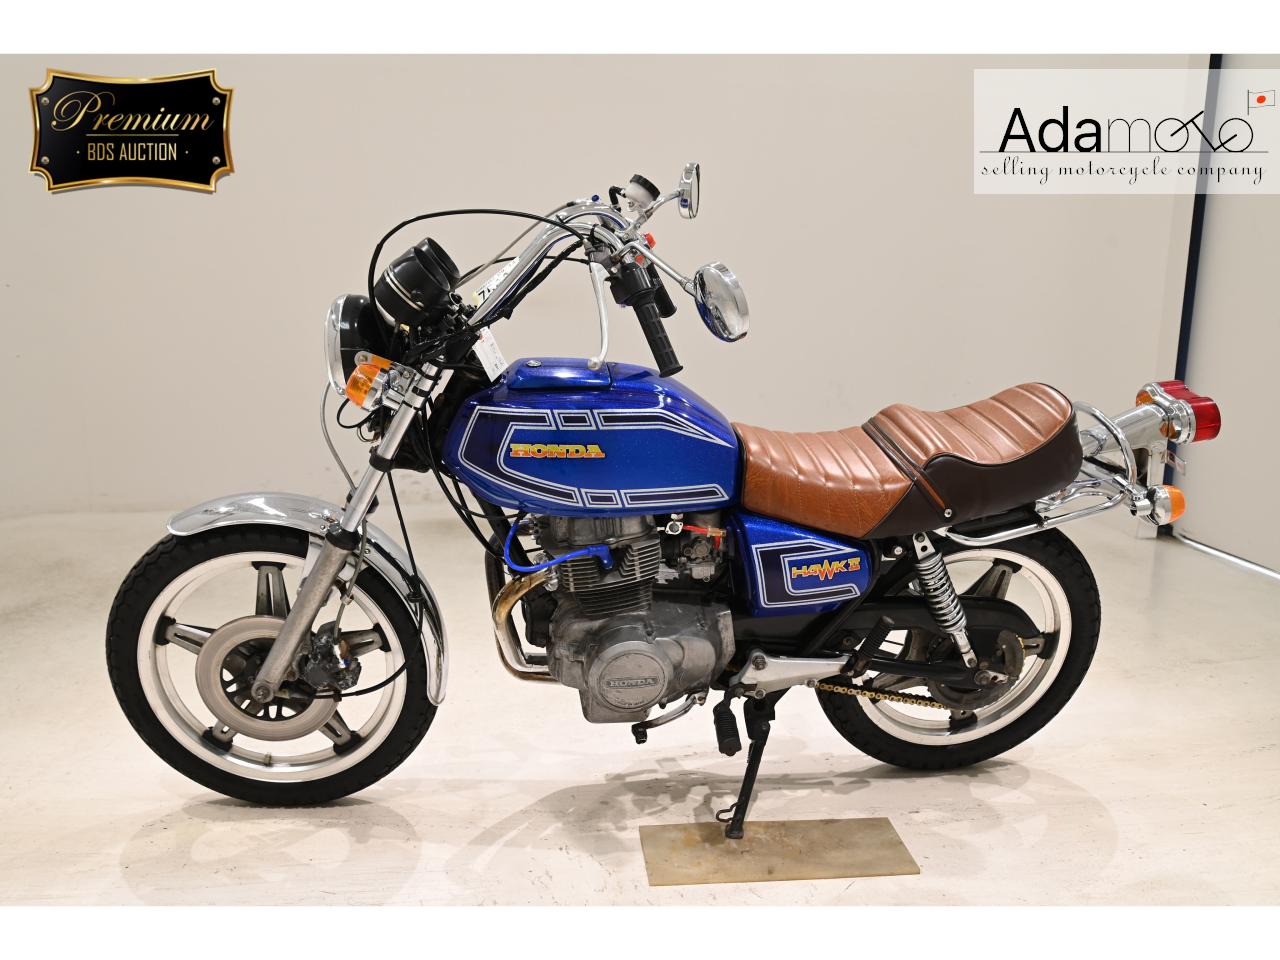 Honda CB250T - Adamoto - Motorcycles from Japan